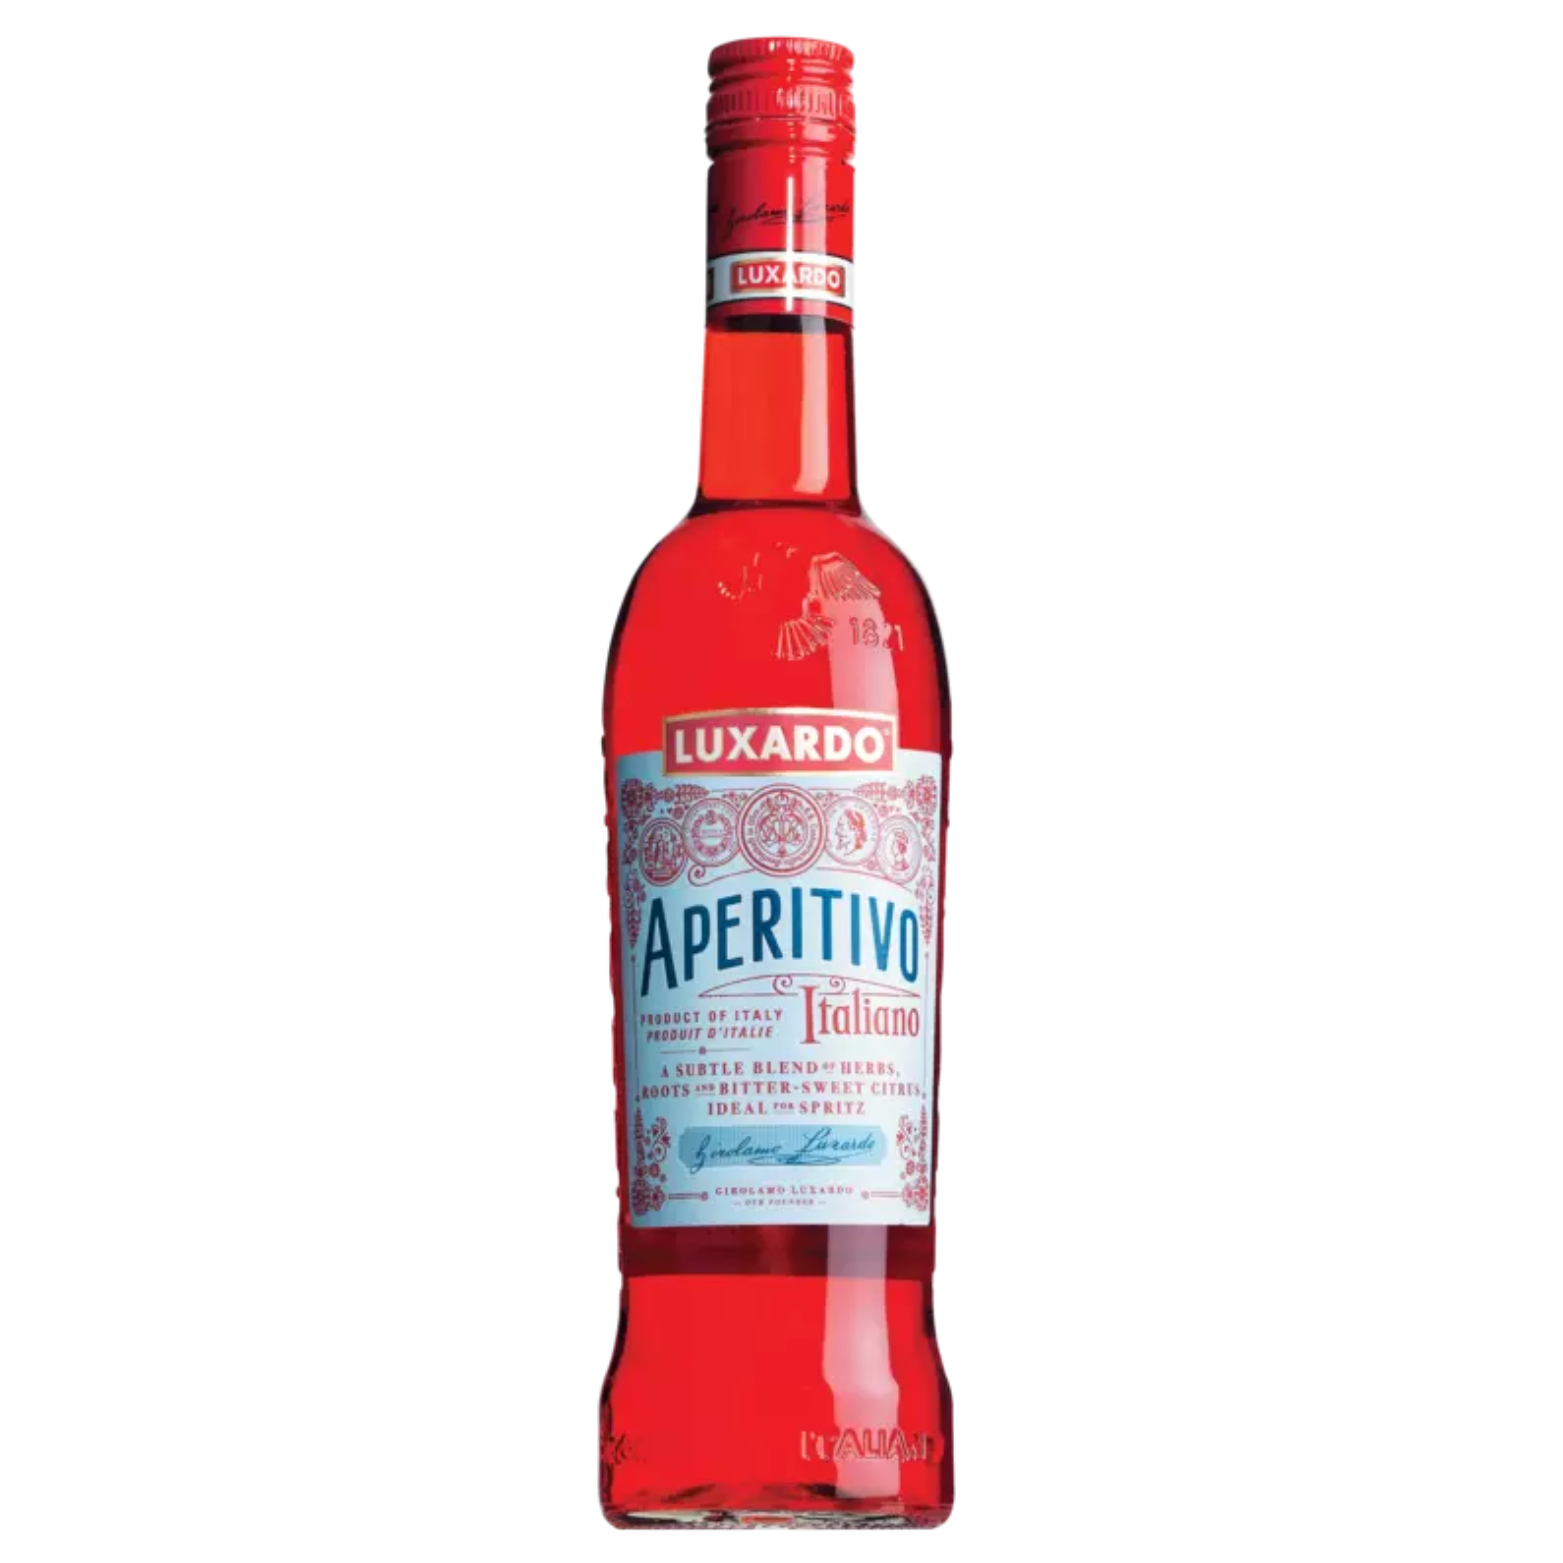 Aperitivo Spritz – Luxardo – Aperitivgetränk, 0,7l